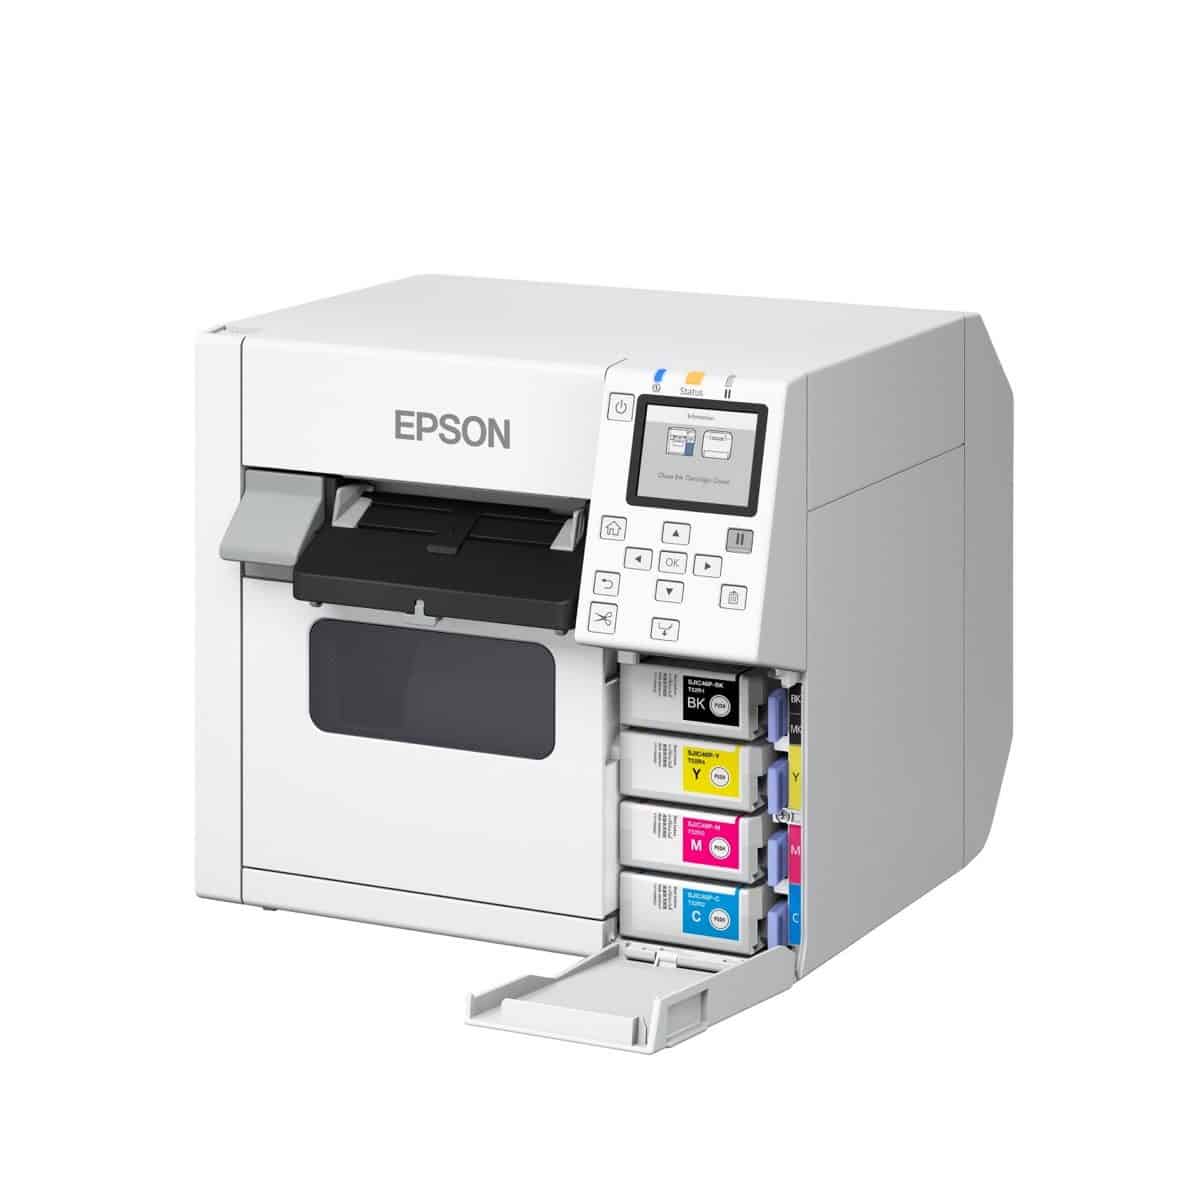 Epson ColorWorks C4050